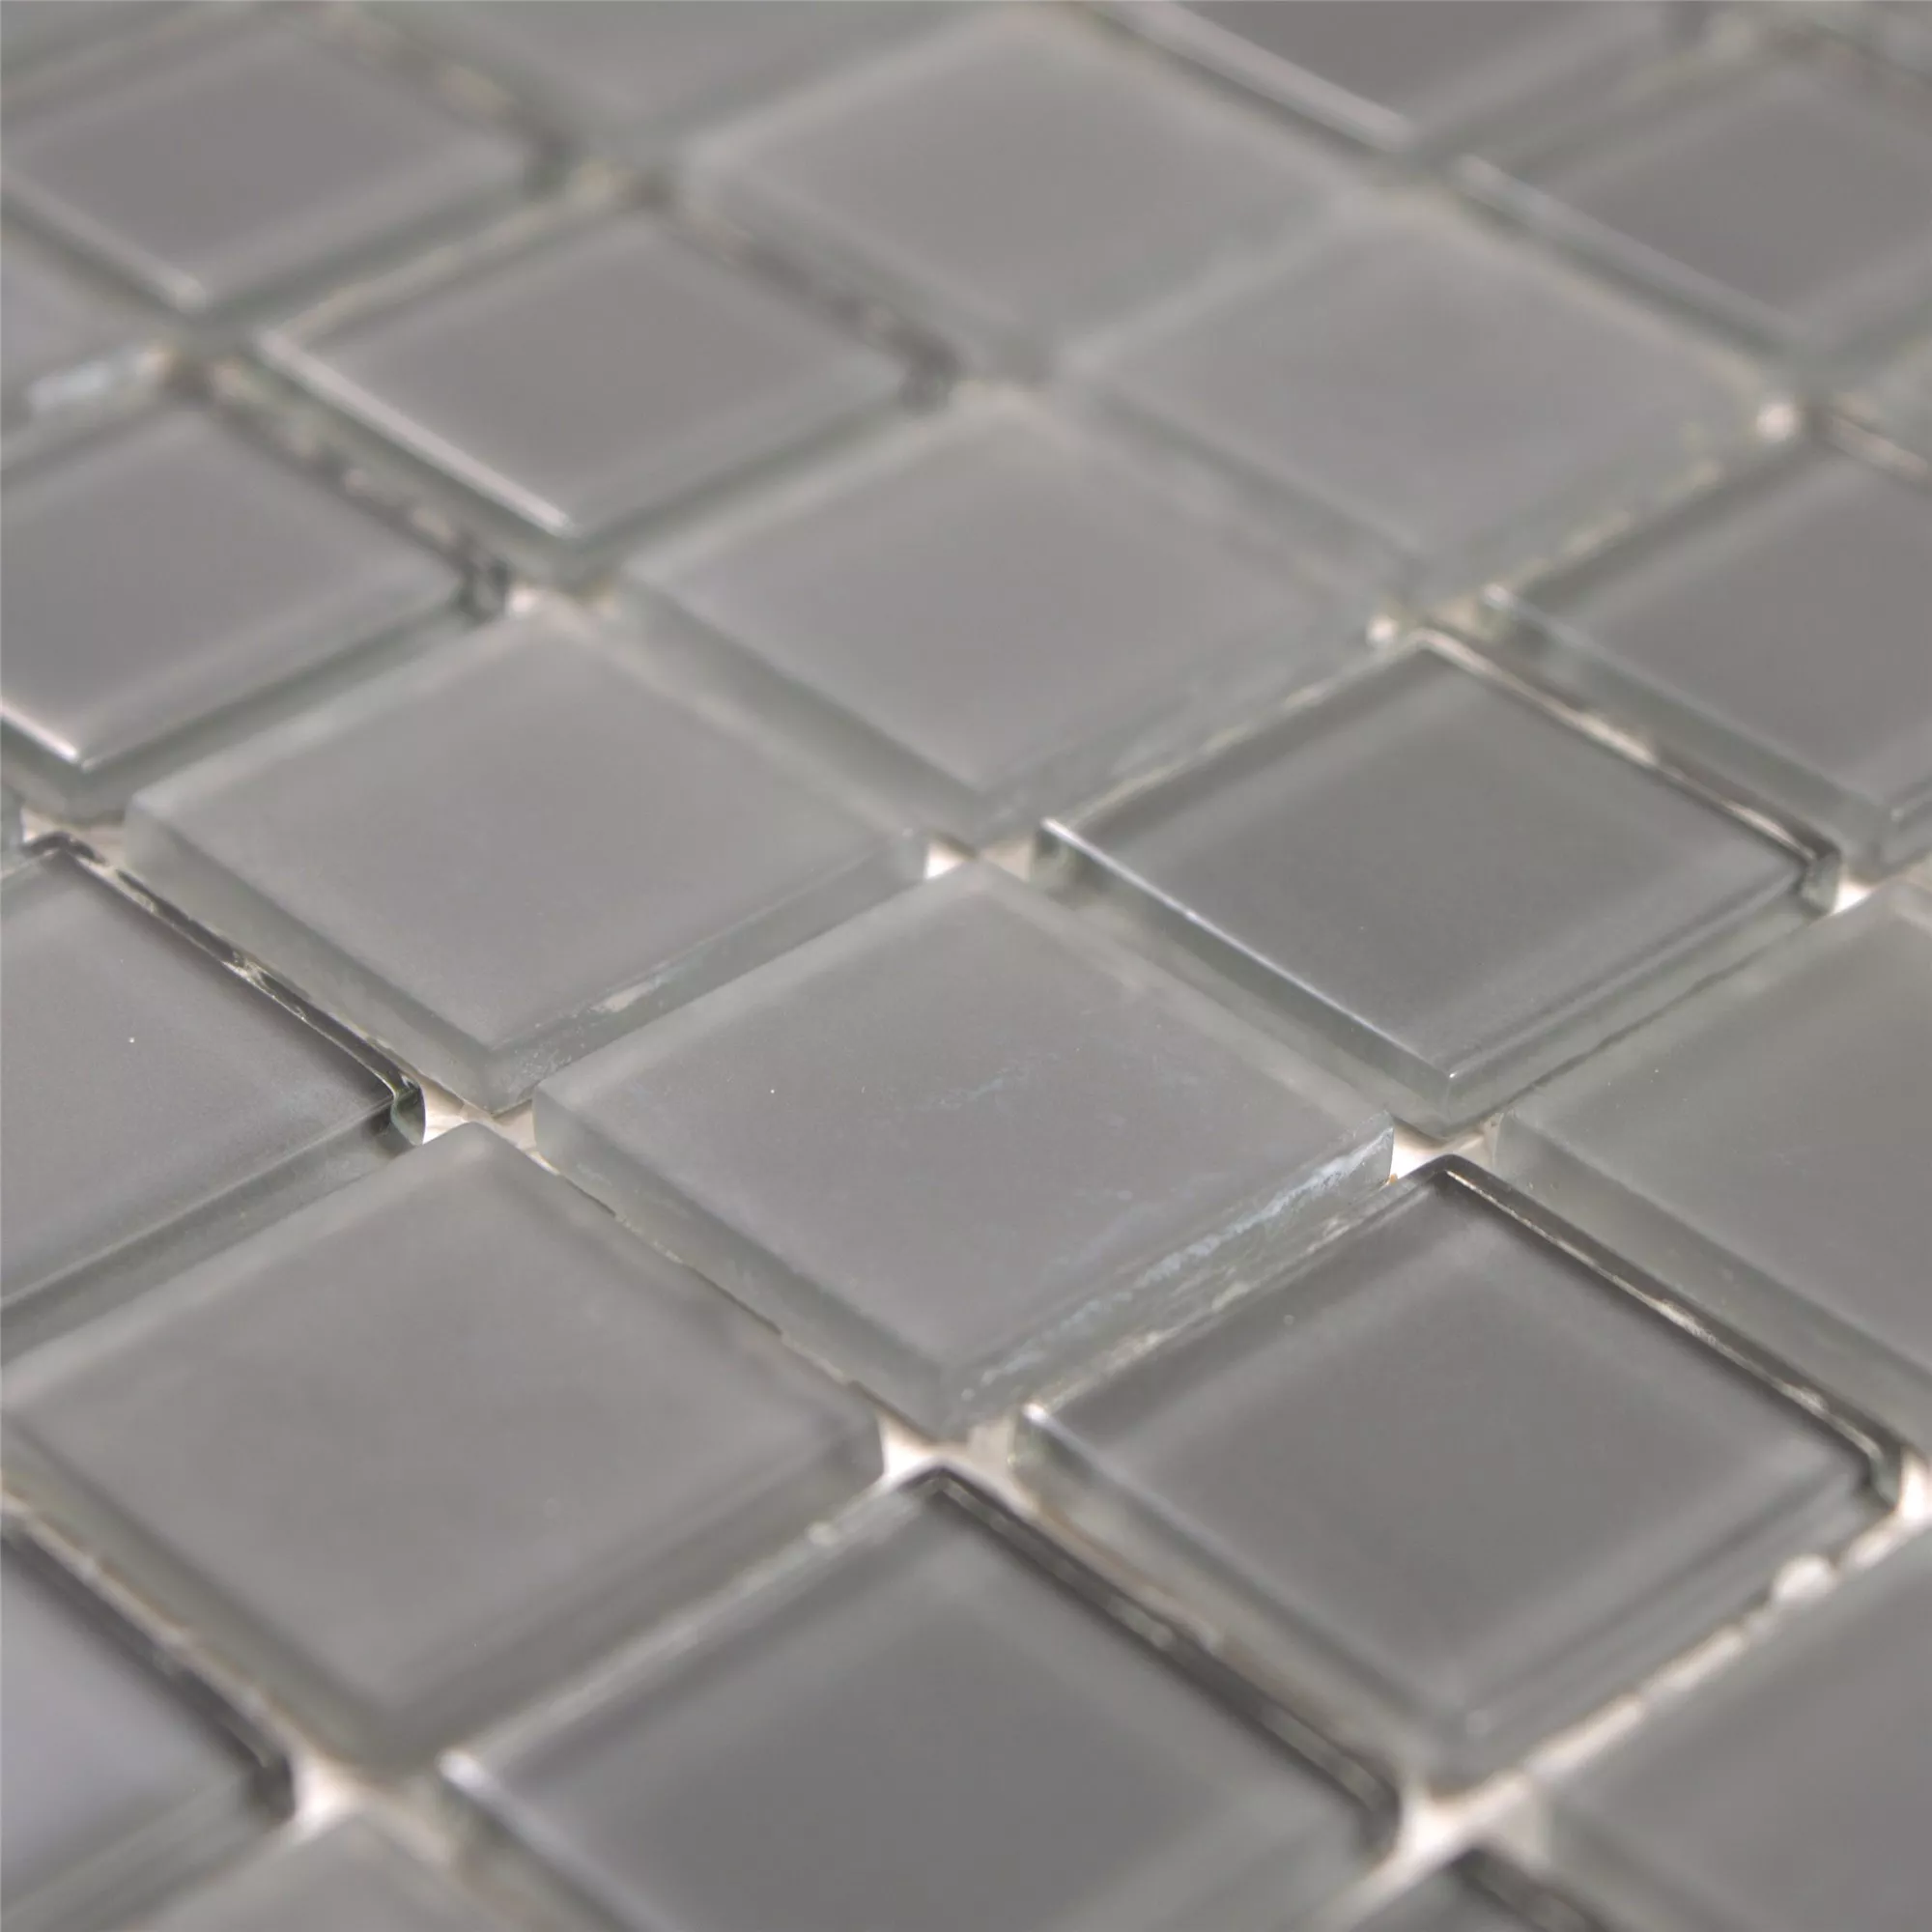 Glass Mosaic Tiles Bommel Grey Anthracite